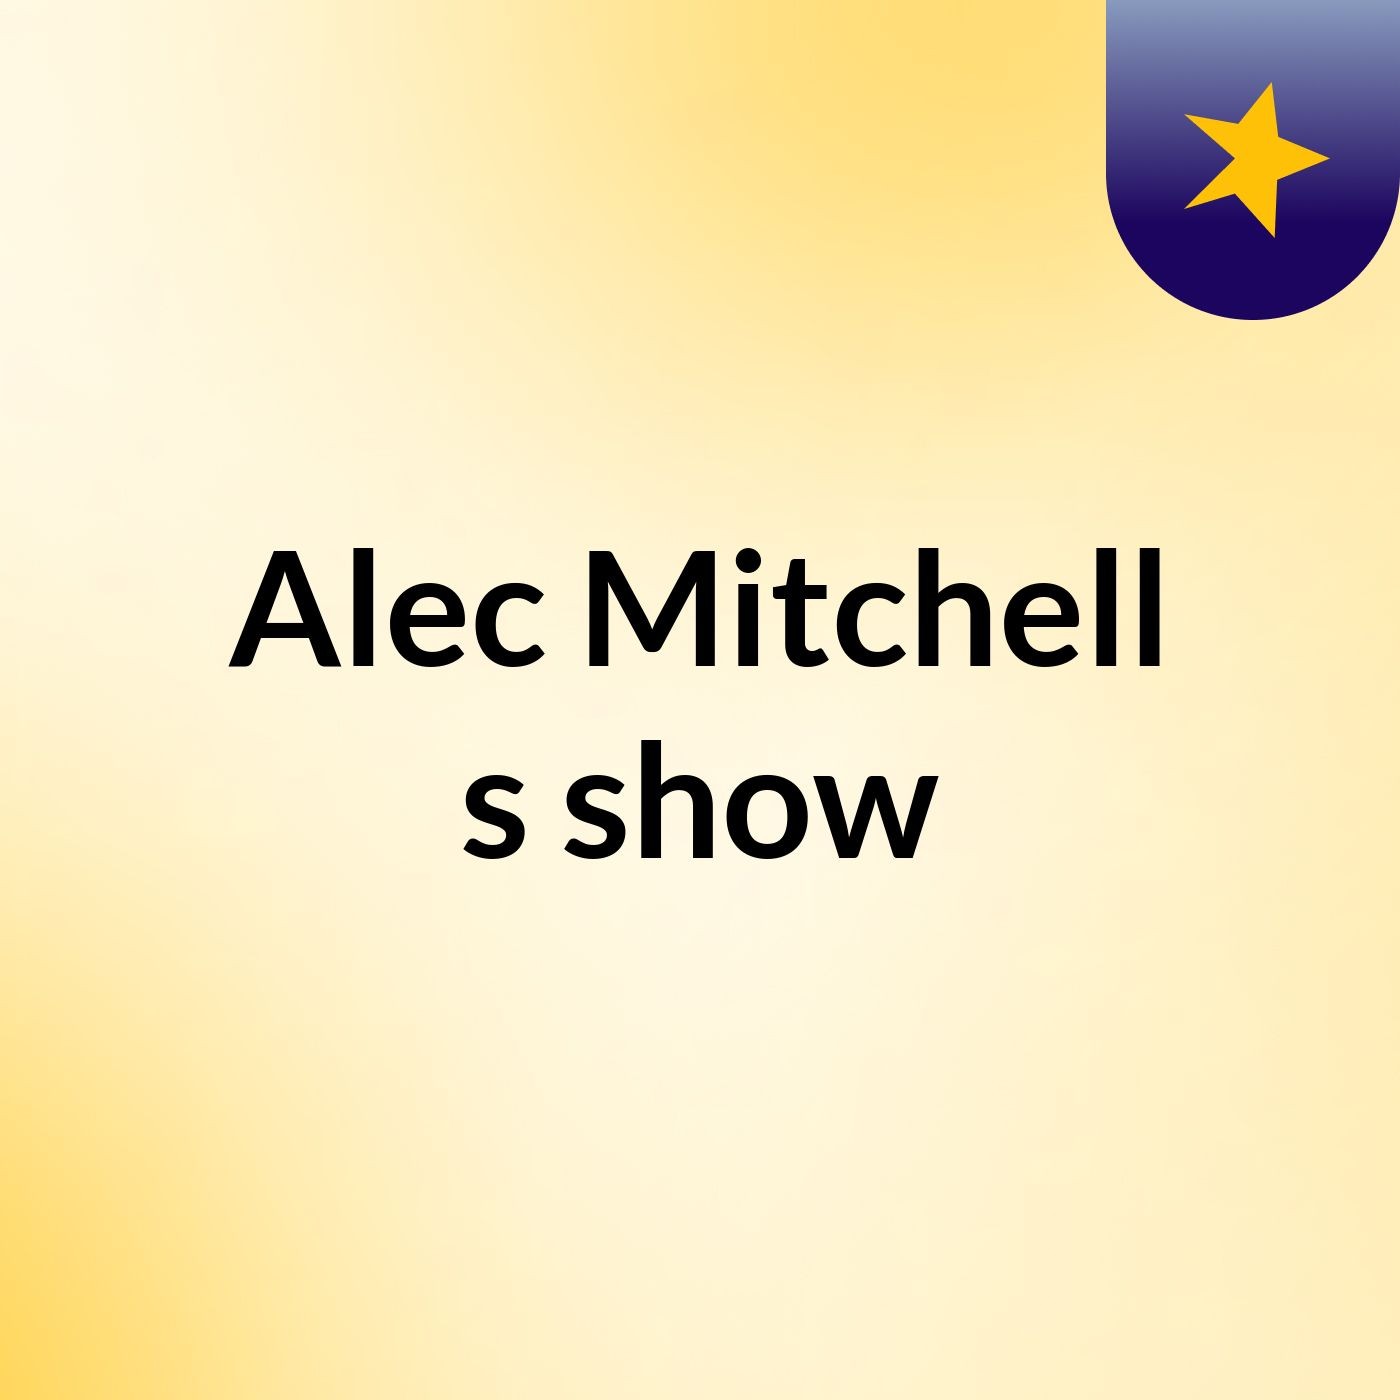 Alec Mitchell's show